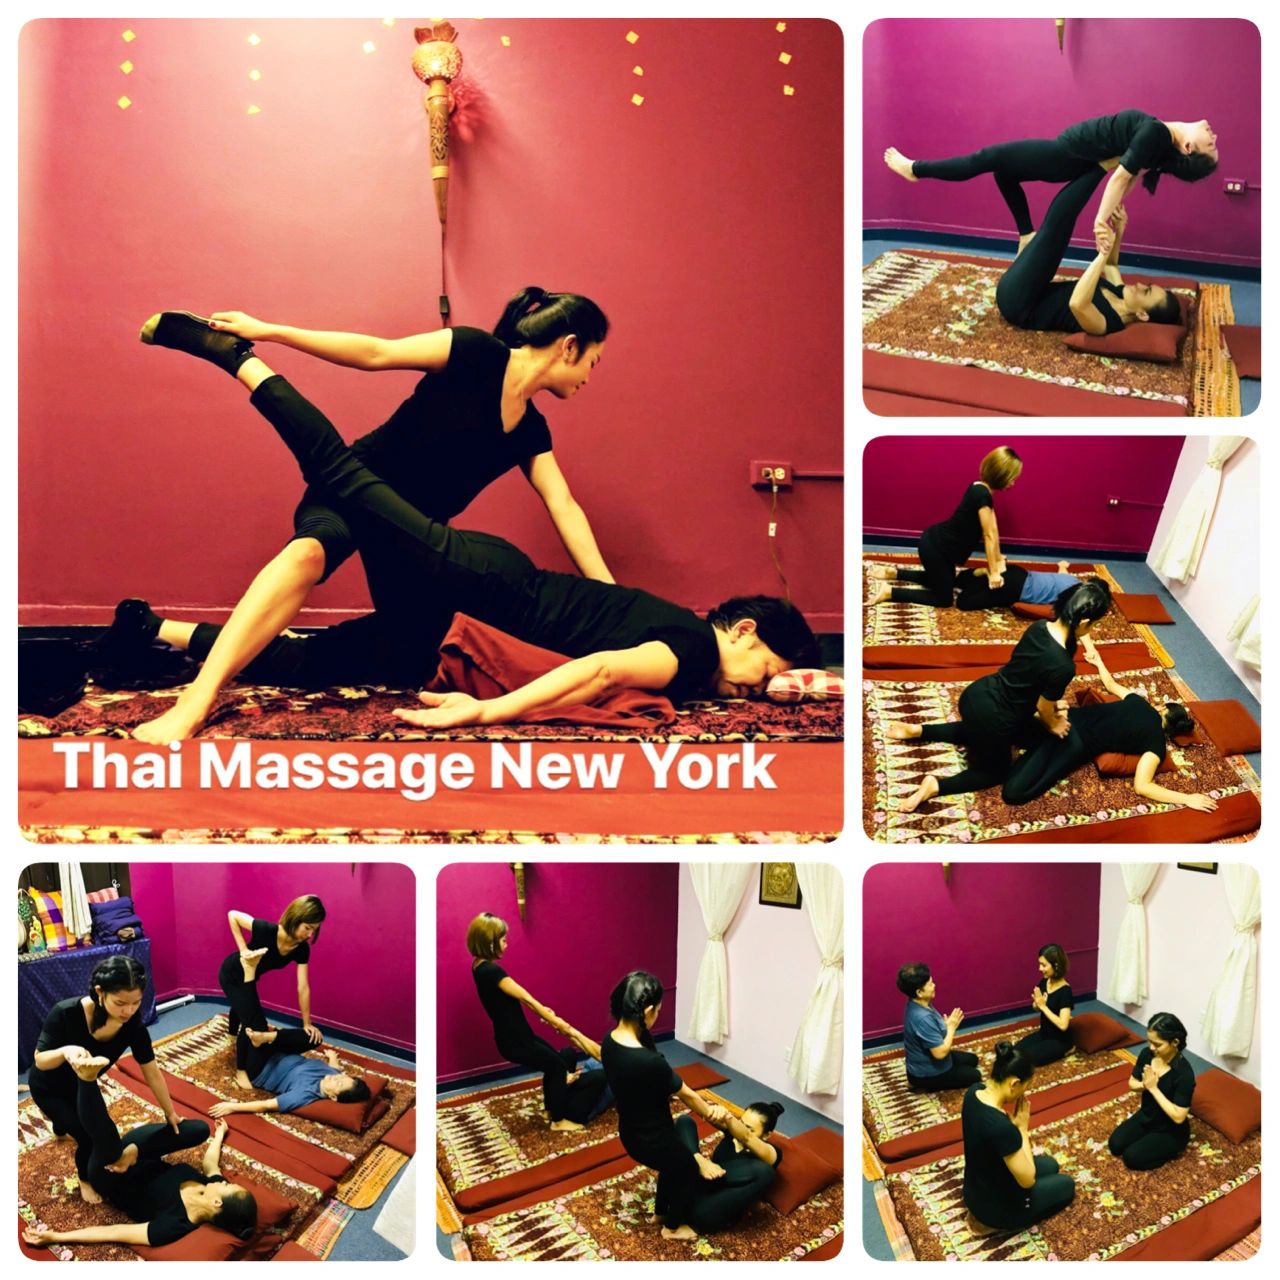 Thai Massage New York City